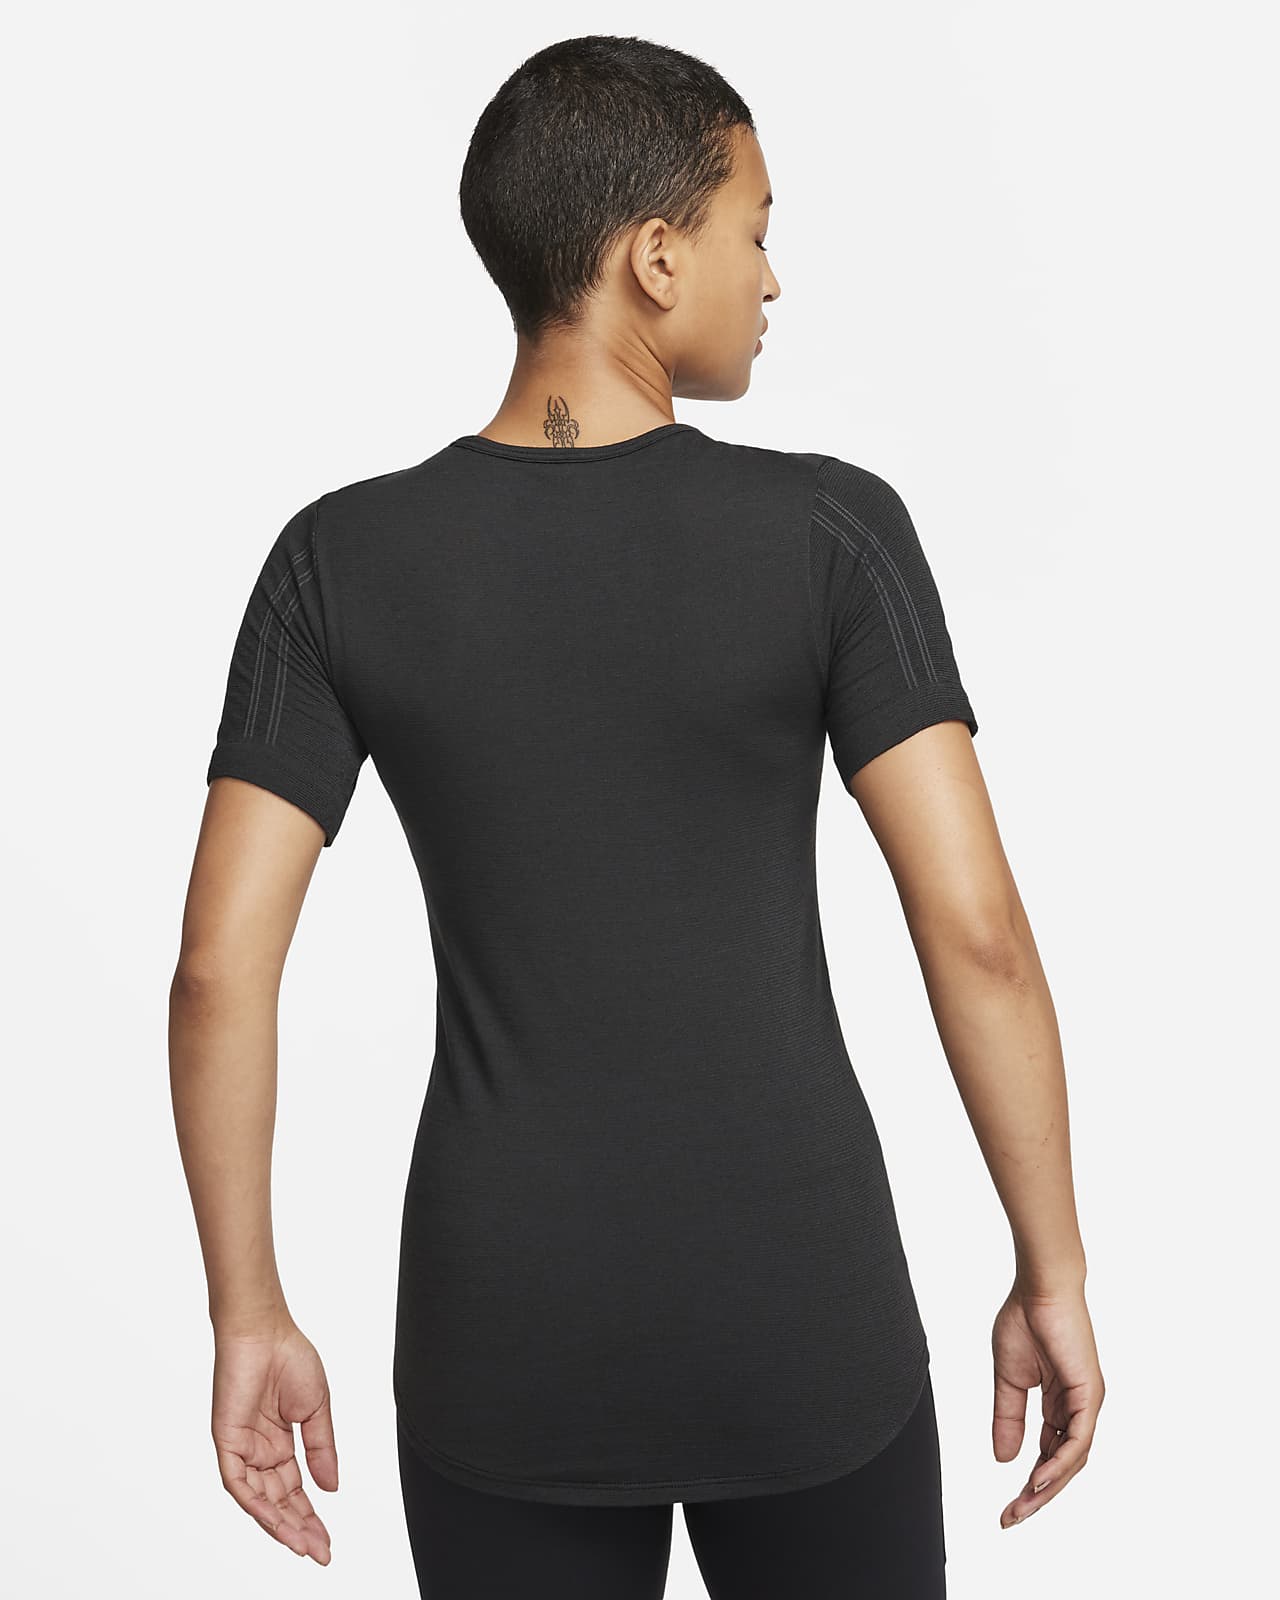 Nike Women's One Classic Dri-FIT Short-Sleeve Top (Plus Size)